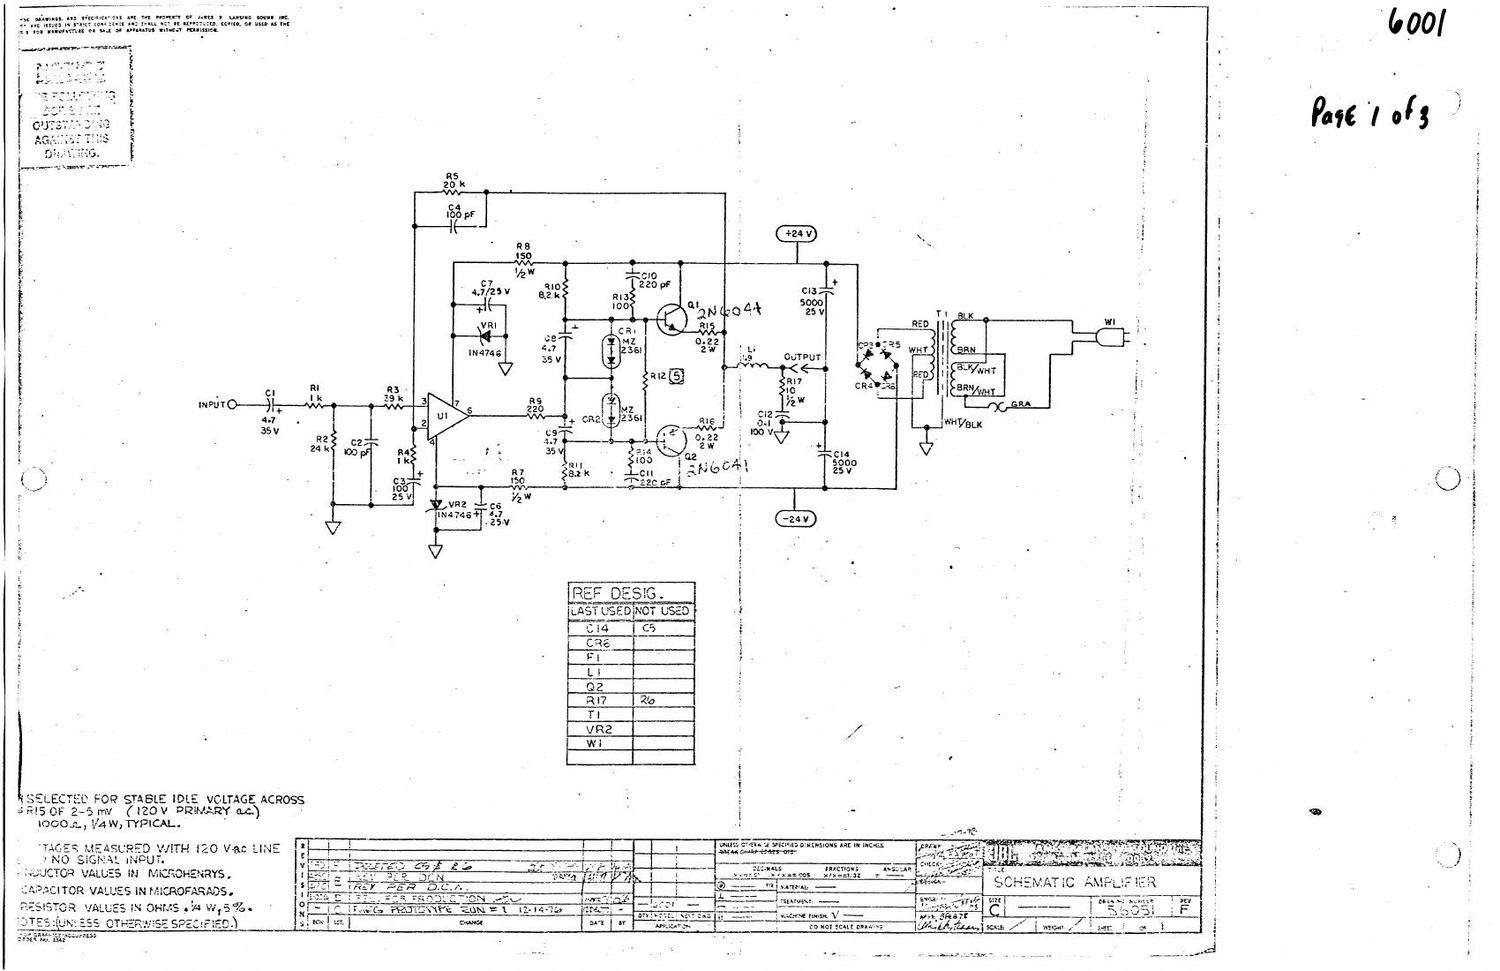 jbl 6001 schematic